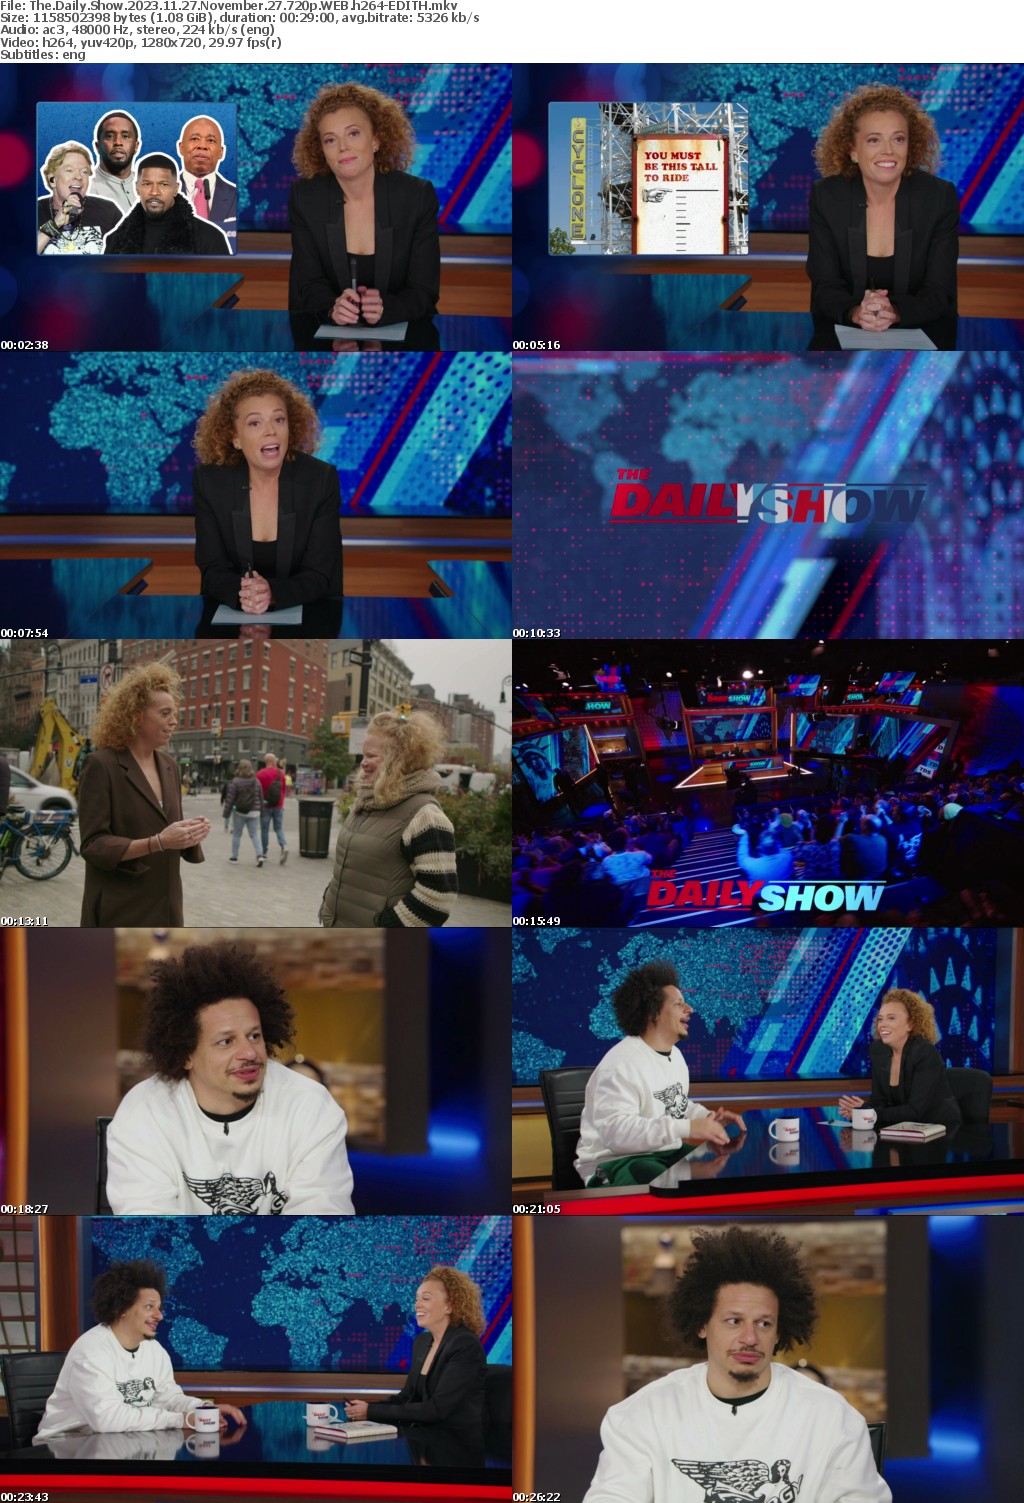 The Daily Show 2023 11 27 November 27 720p WEB h264-EDITH